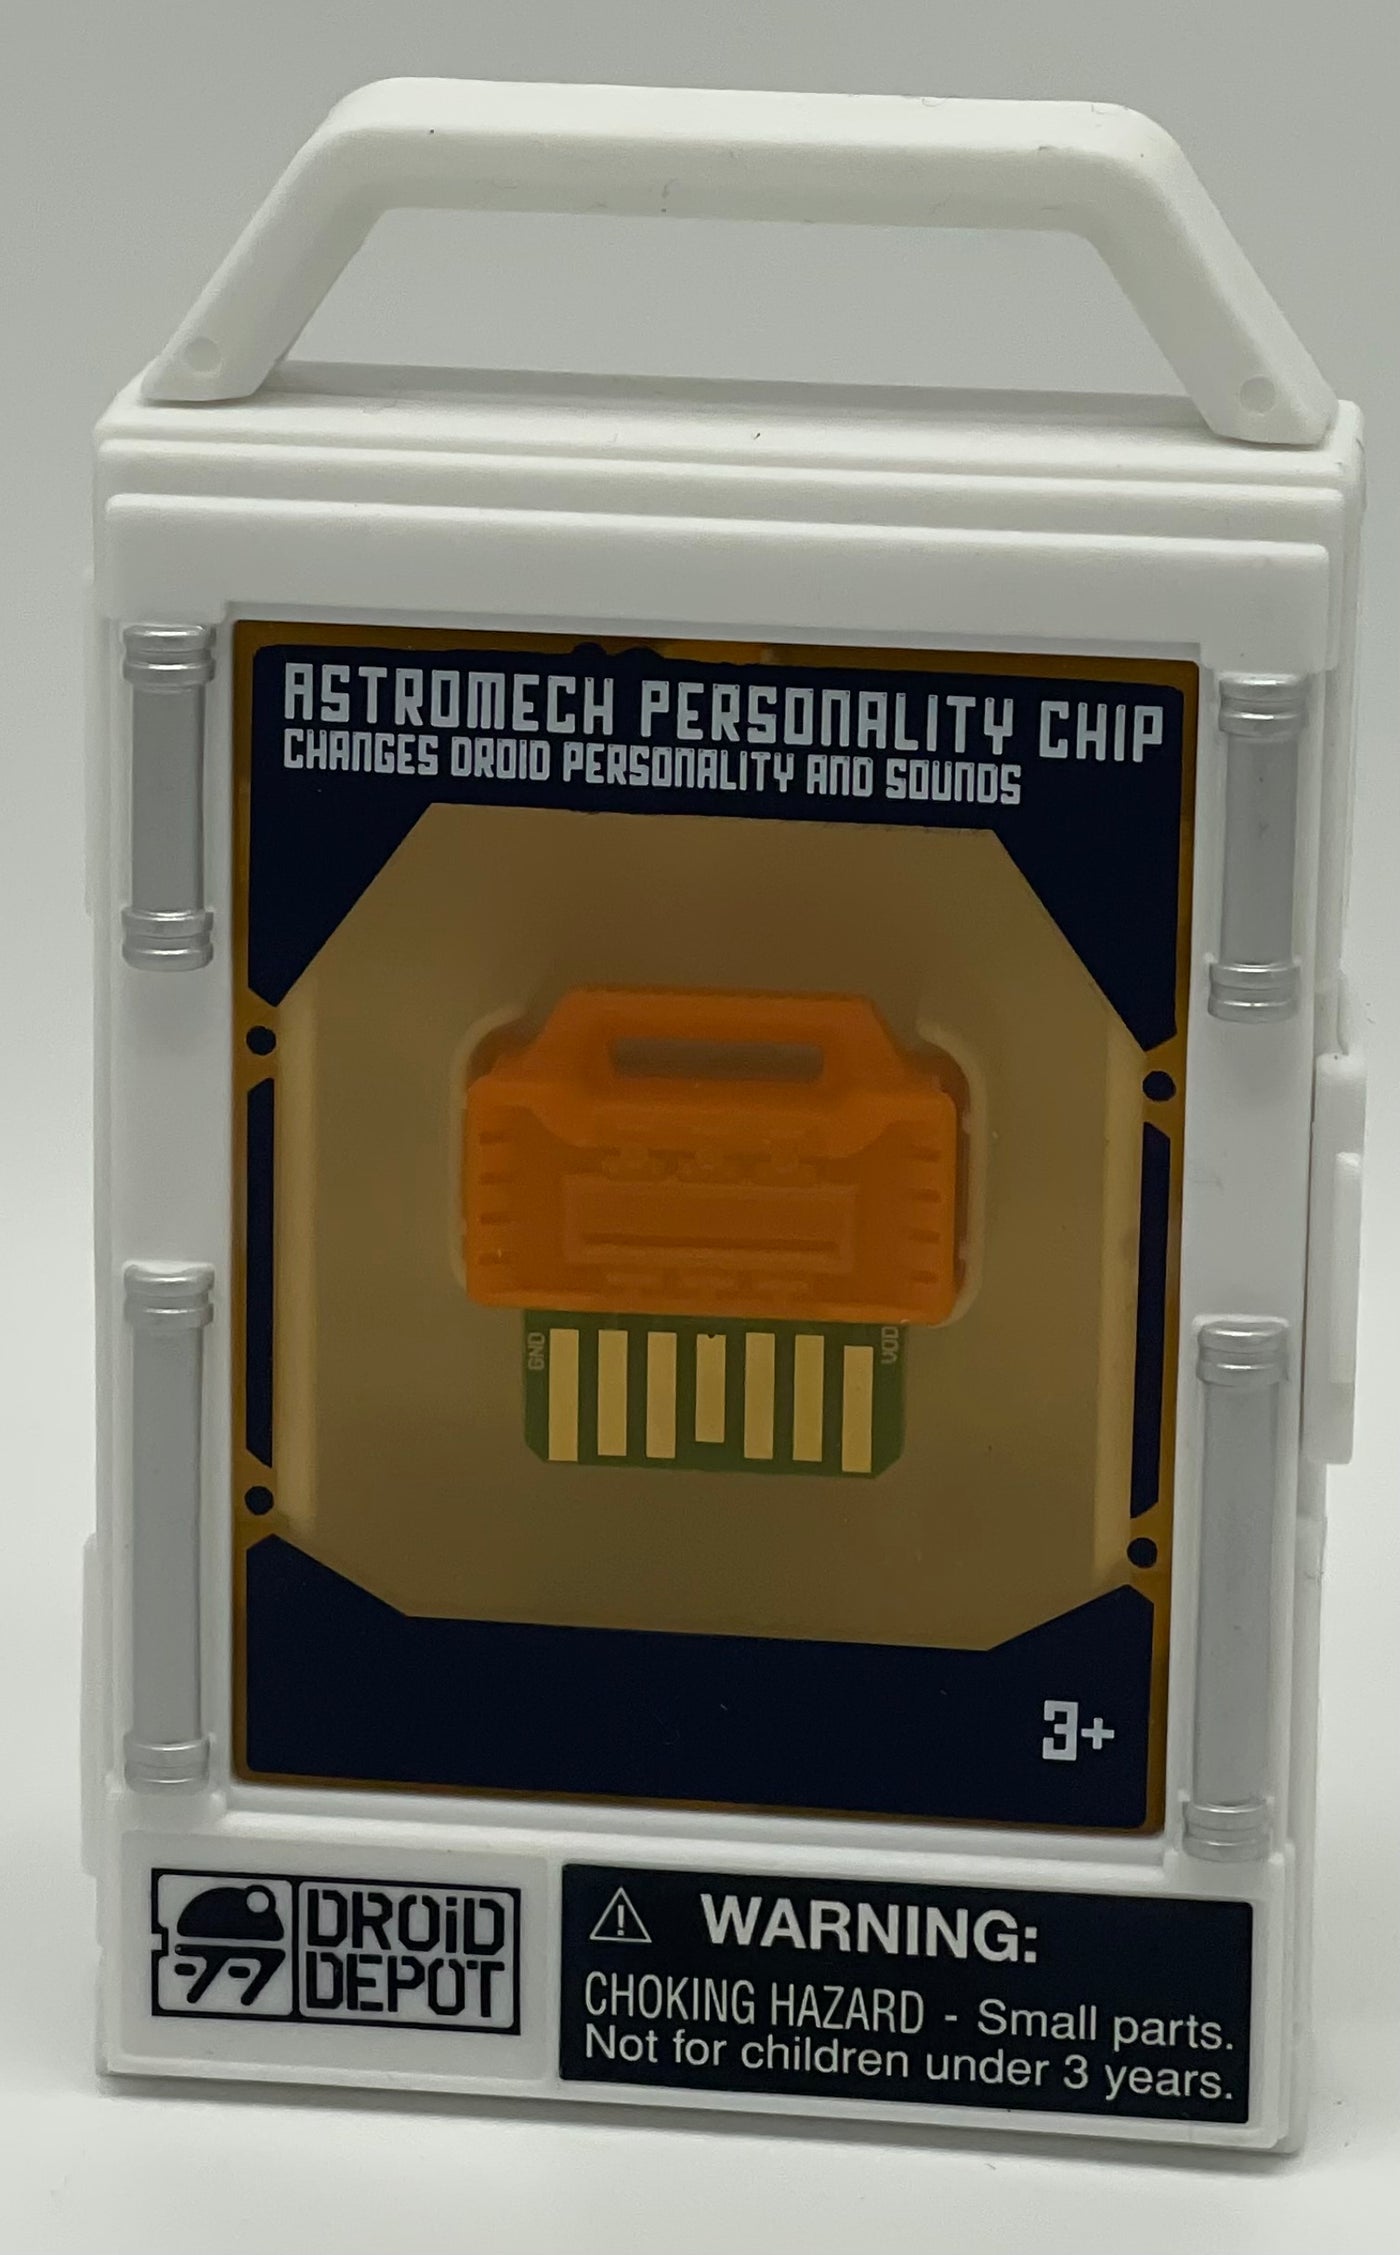 Disney Star Wars Galaxy's Orange Droid Depot Astromech Personality Chip New